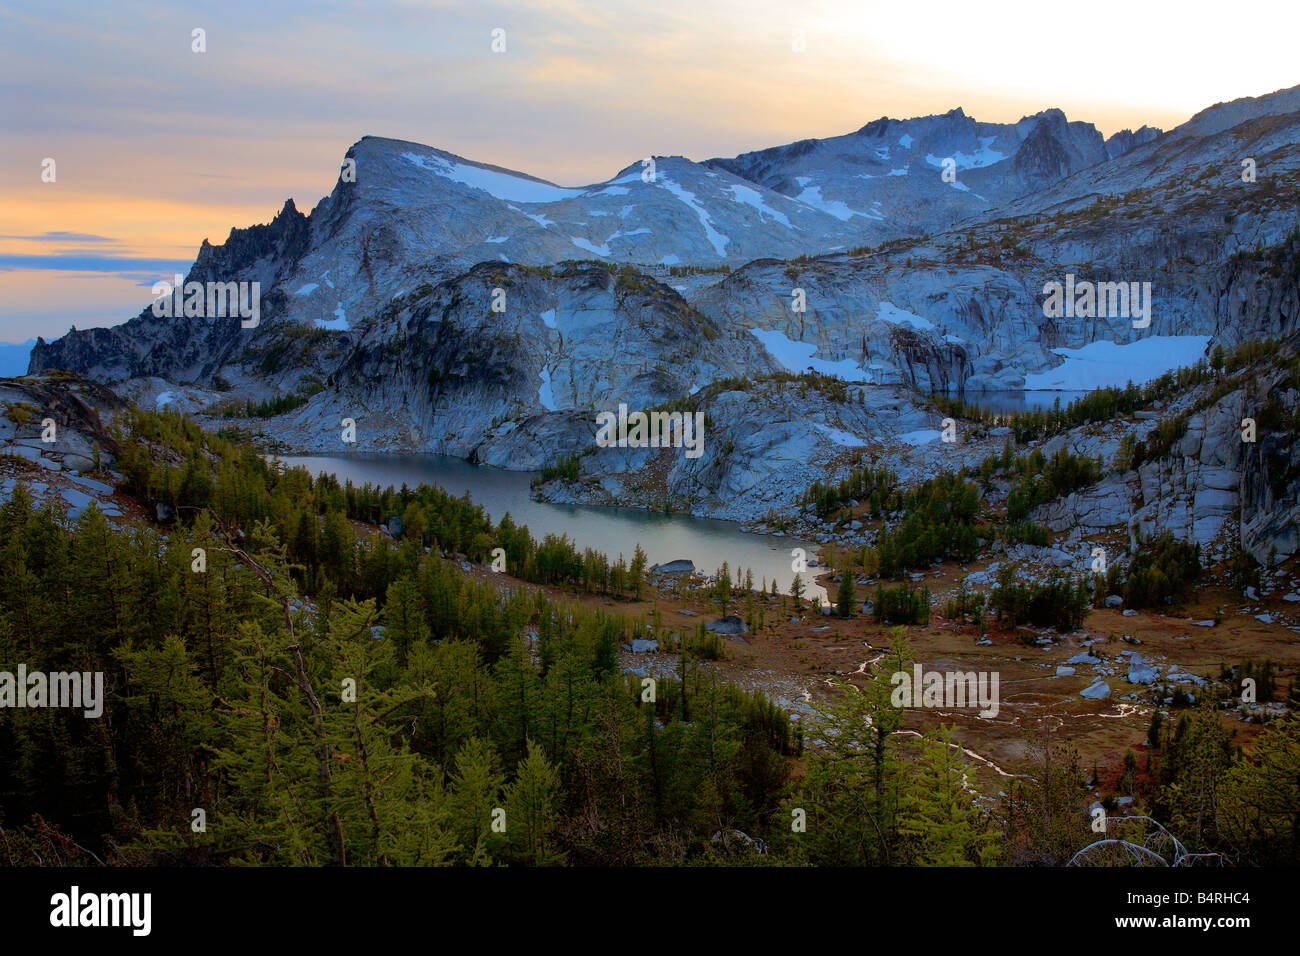 View of Upper Enchantment Lakes area of Alpine Lakes Wilderness, Washington Stock Photo